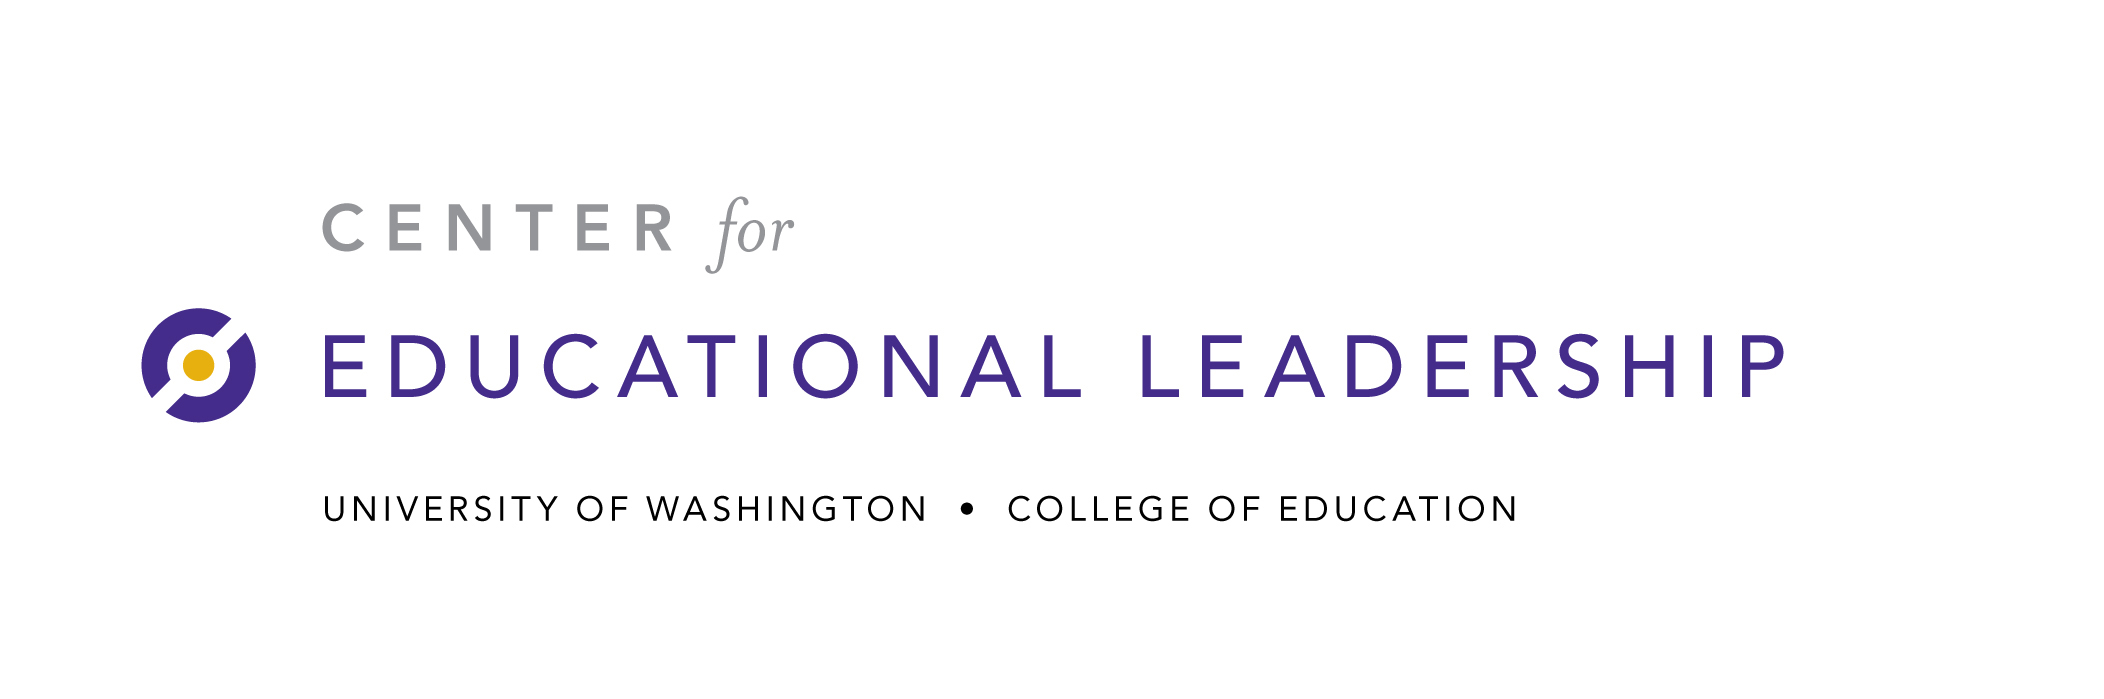 Center for Educational Leadership at the University of Washington